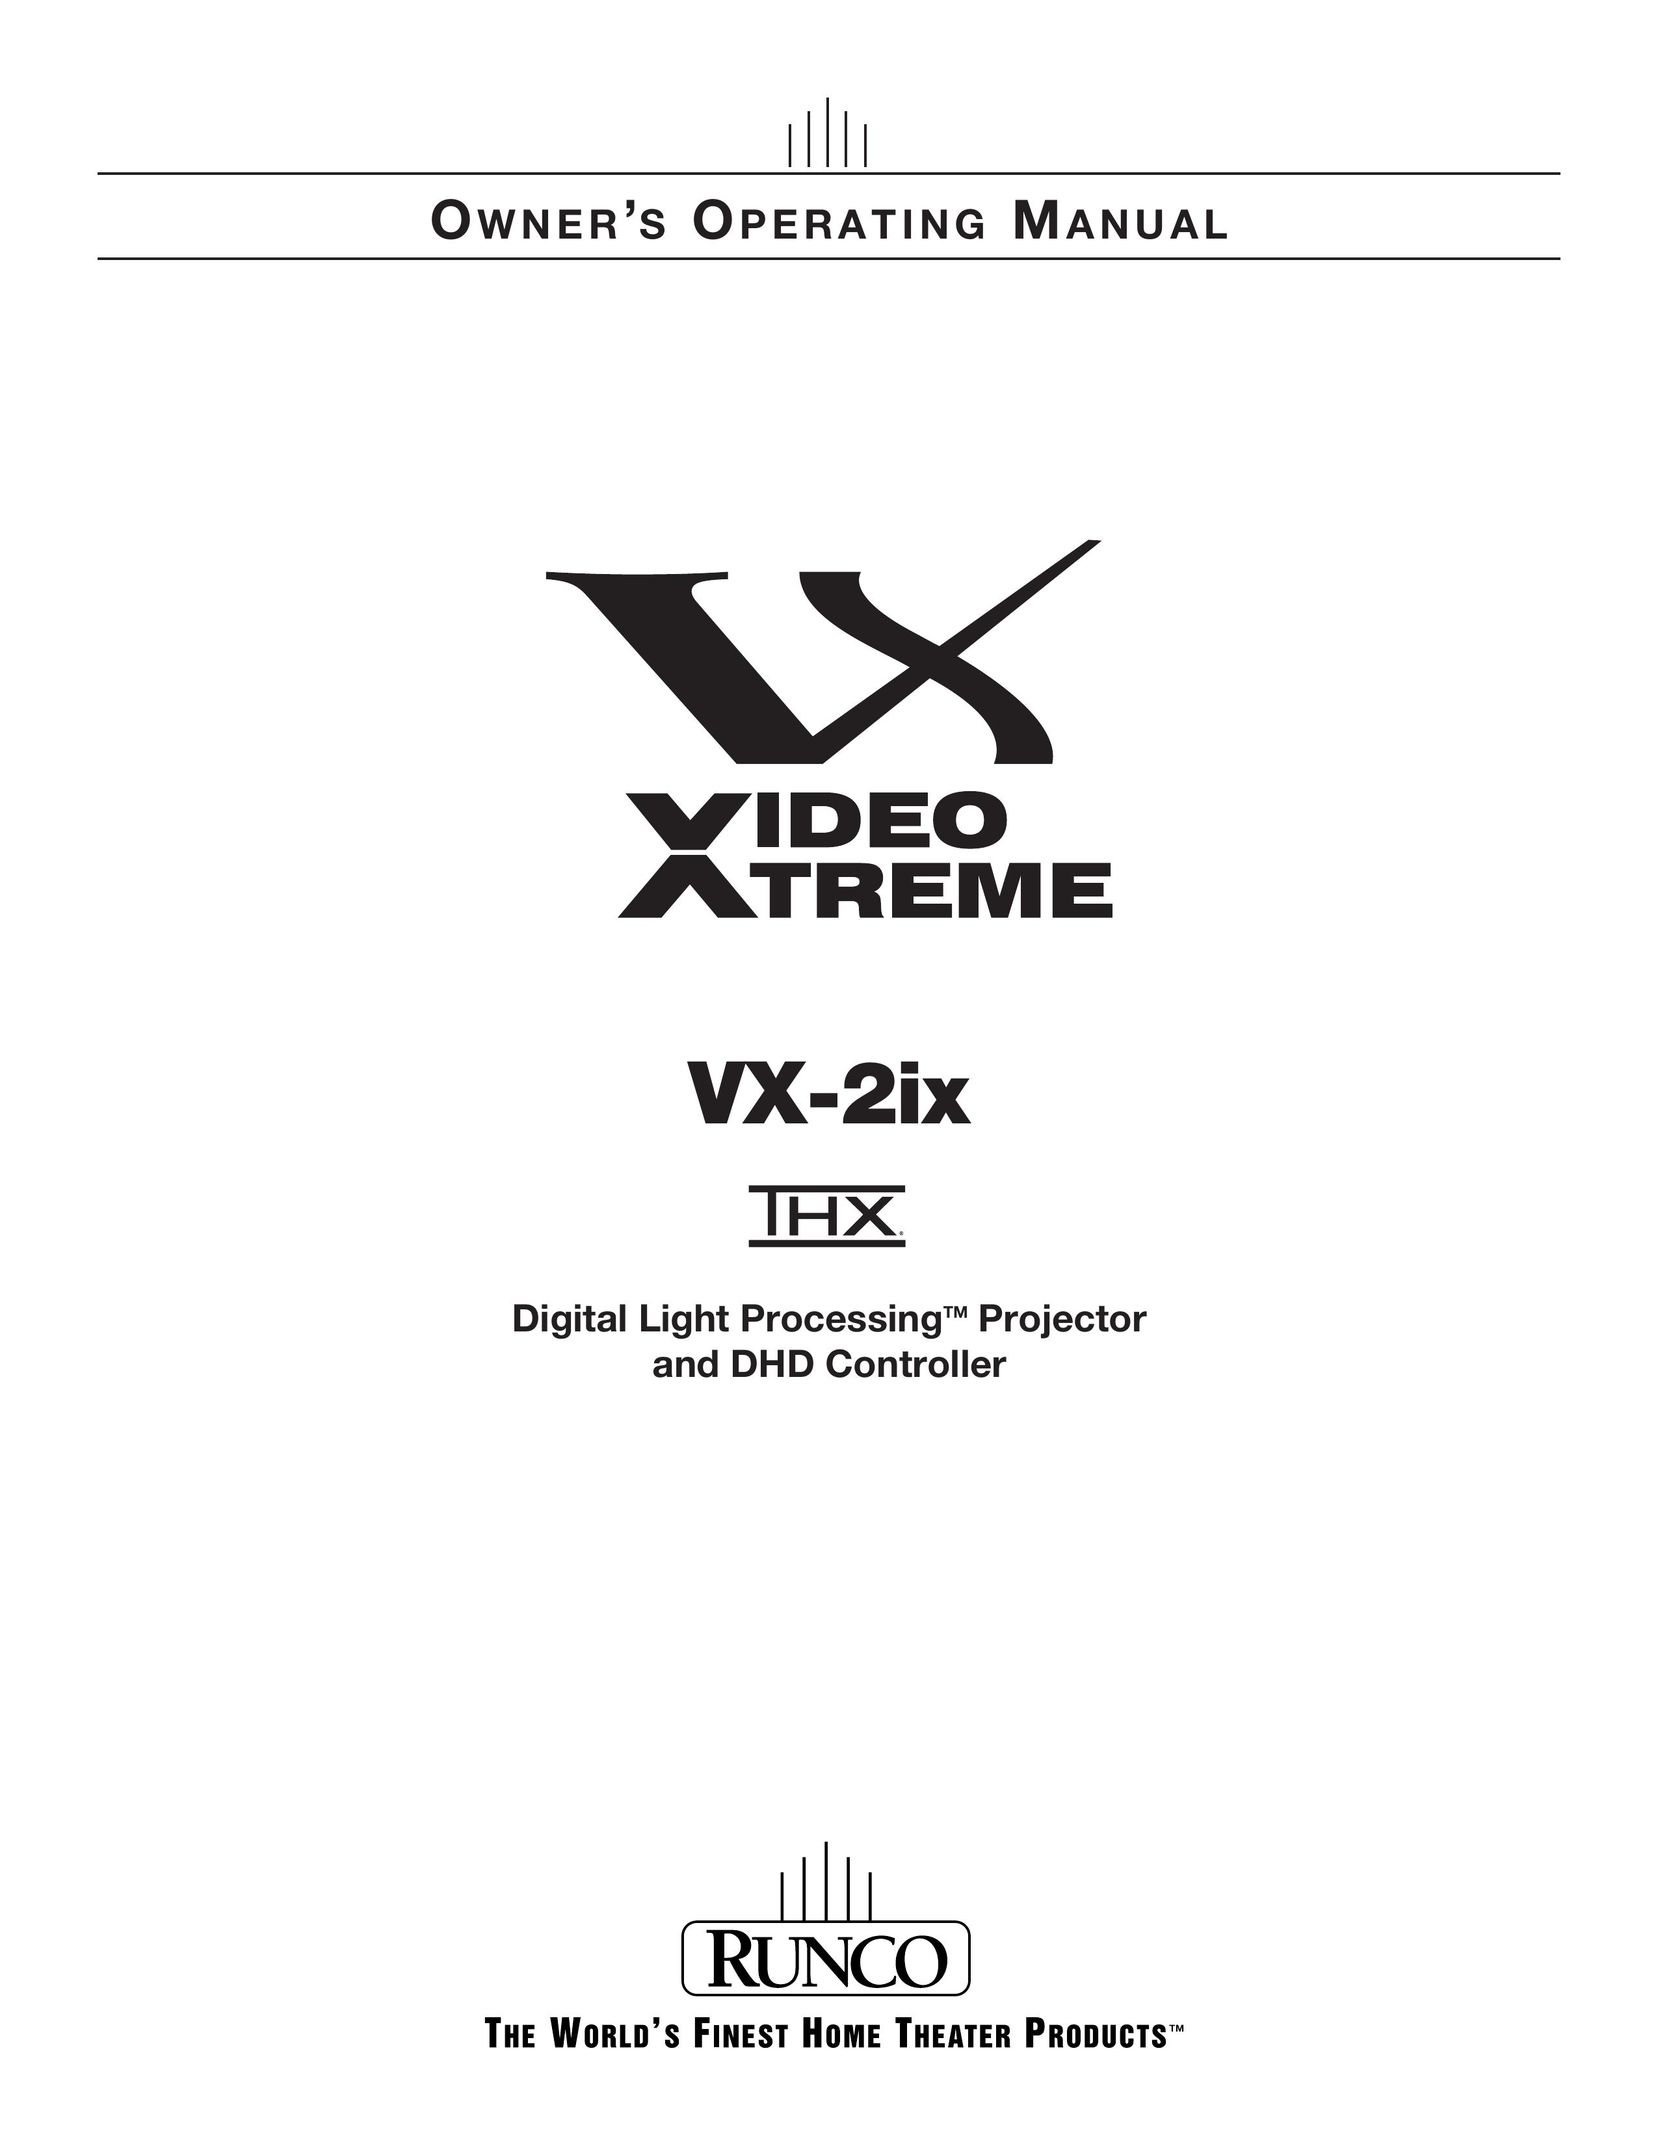 Runco VX-2ix Projection Television User Manual